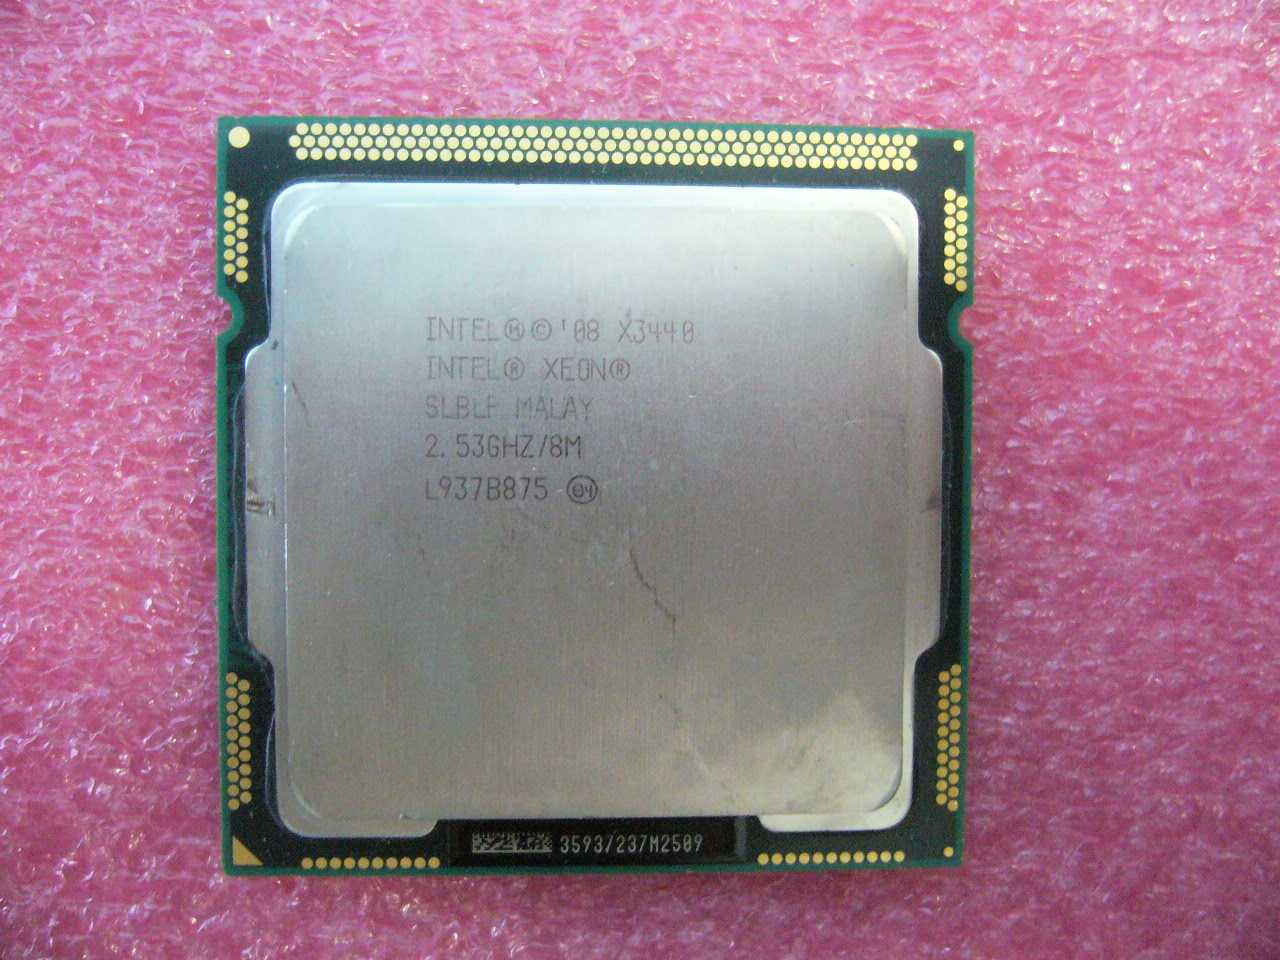 QTY 1x INTEL Xeon CPU X3440 2.53GHZ/8MB LGA1156 SLBLF